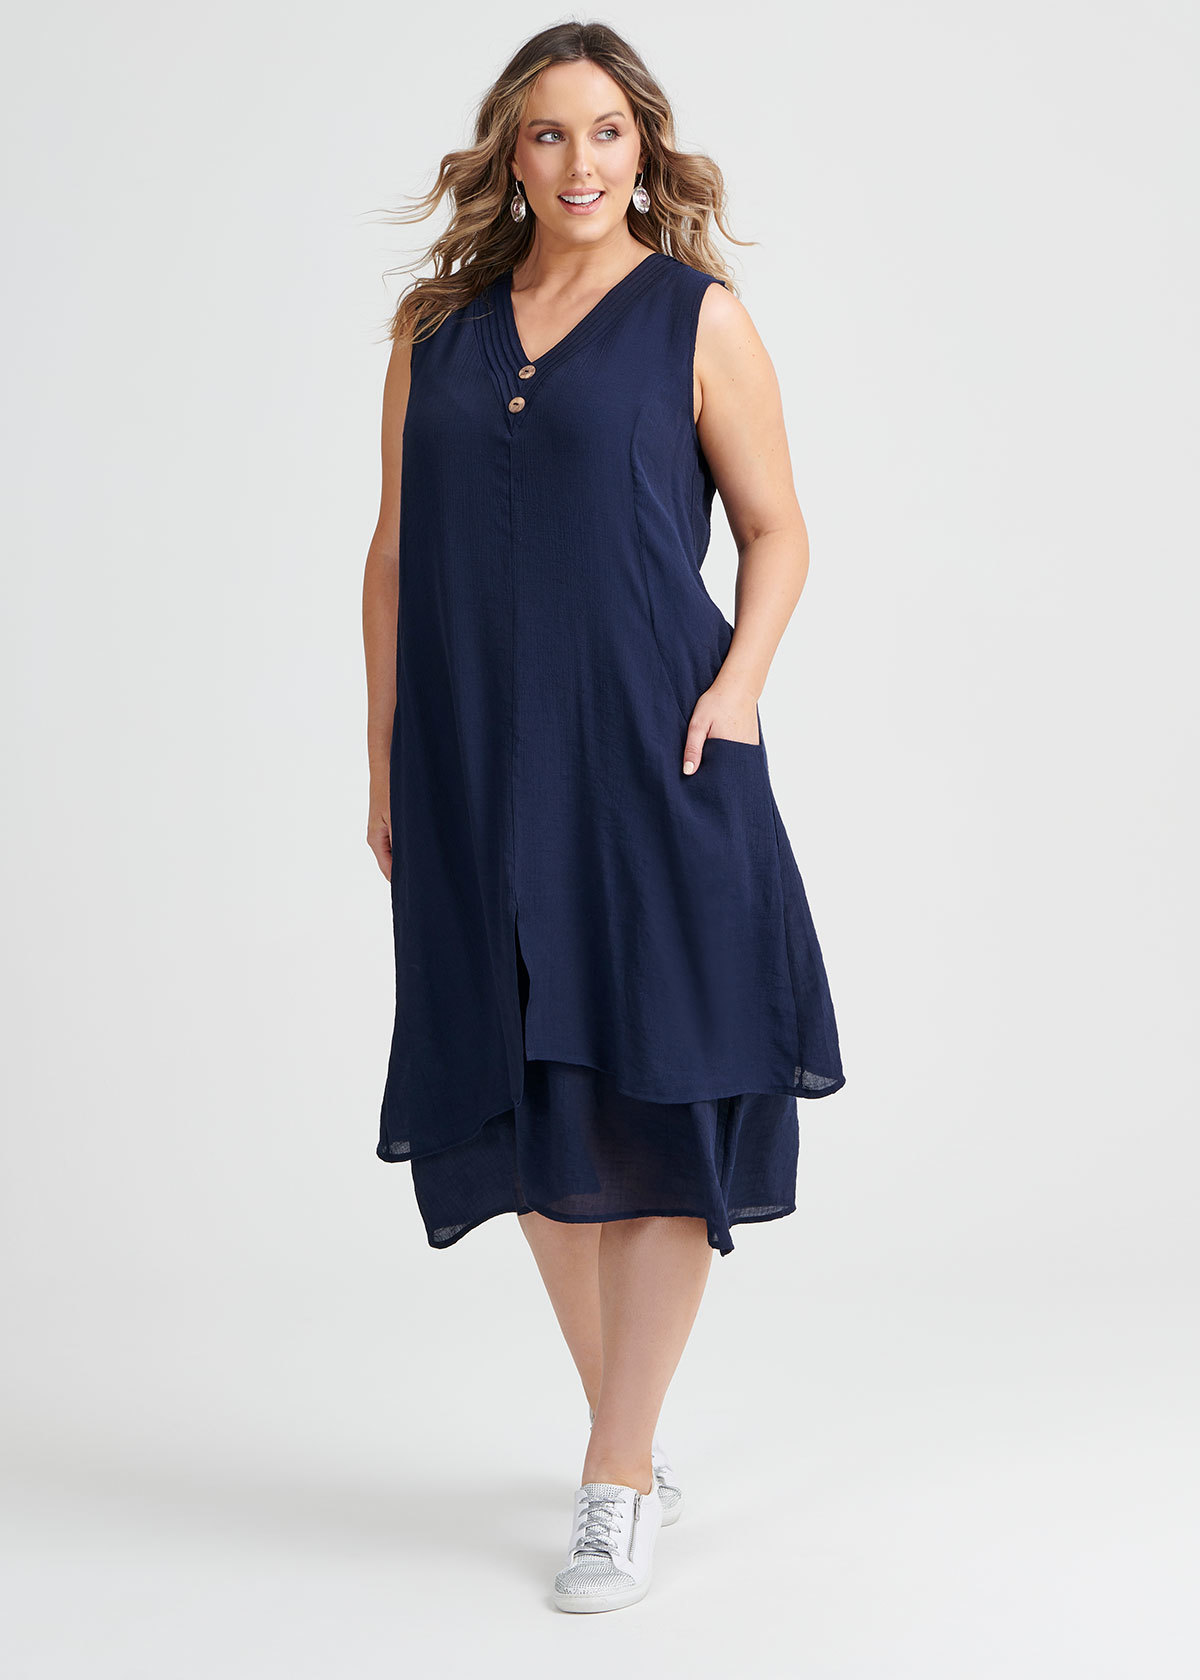 Shop Cali Dress in Navy, Sizes 12-30 | Taking Shape AU